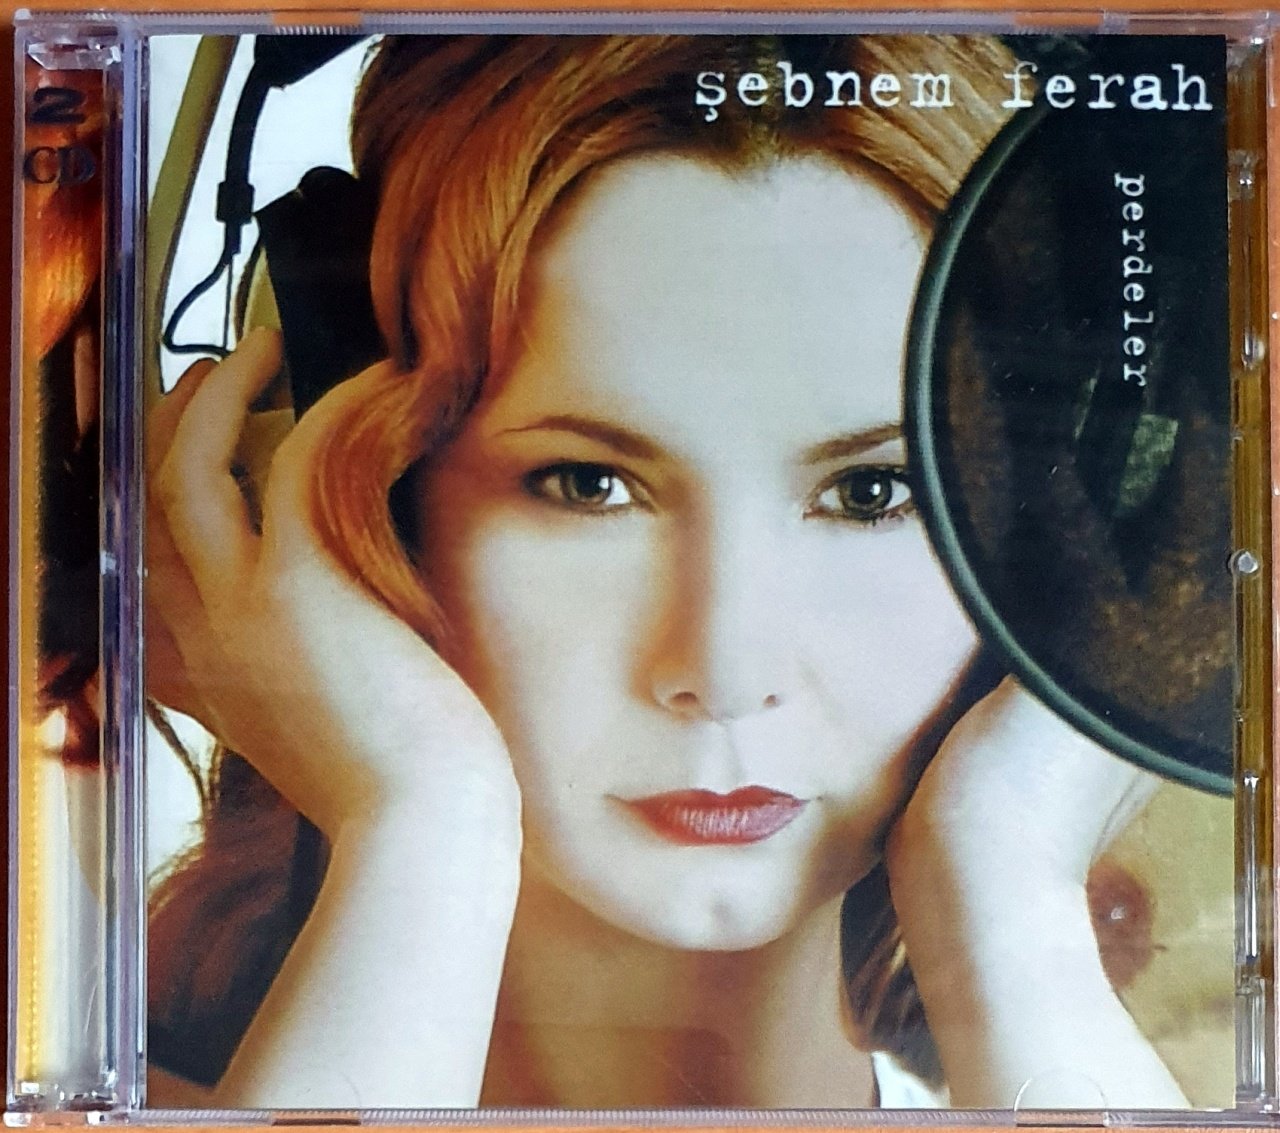 ŞEBNEM FERAH - PERDELER (2001) - CD+VCD 2013 PASAJ MÜZİK BASKI 2.EL